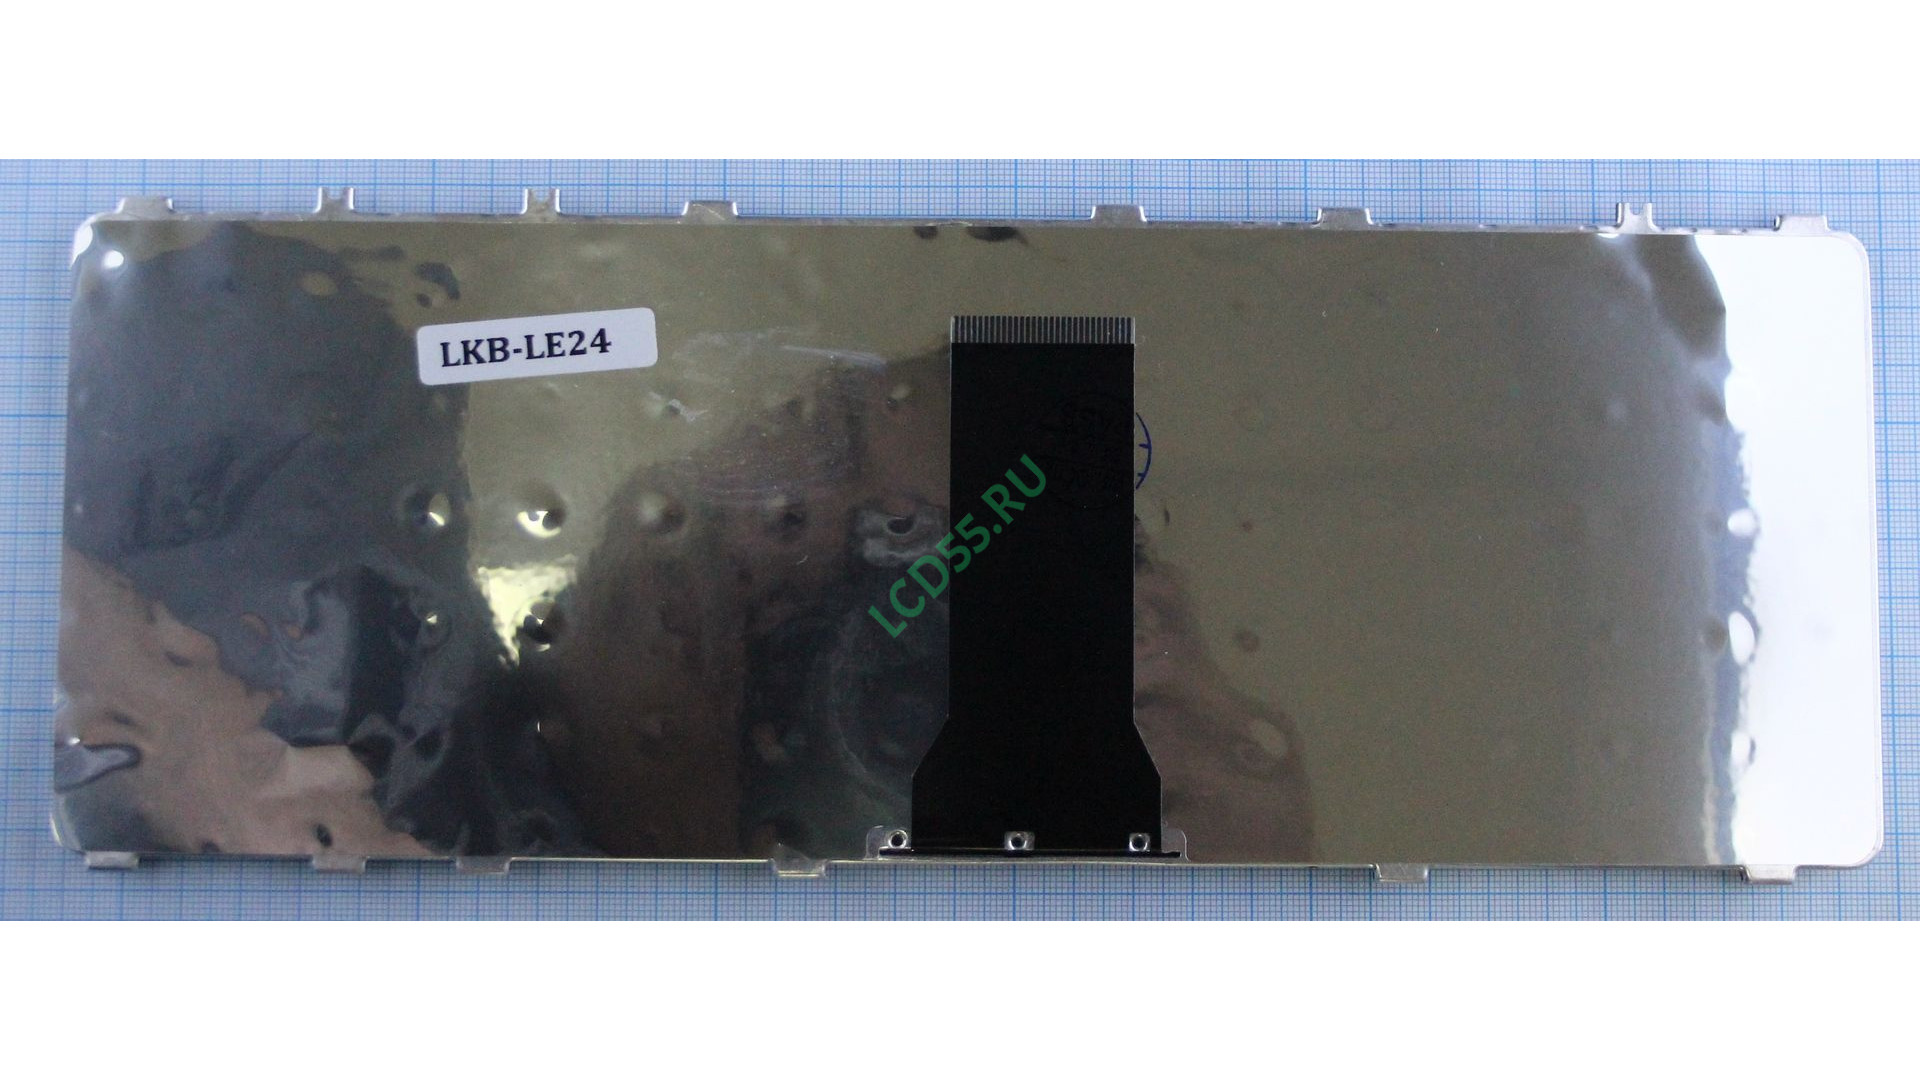 Клавиатура Lenovo  IdeaPad Y450, Y460, Y550, Y560 (черная) (25-008101, N3S-US)